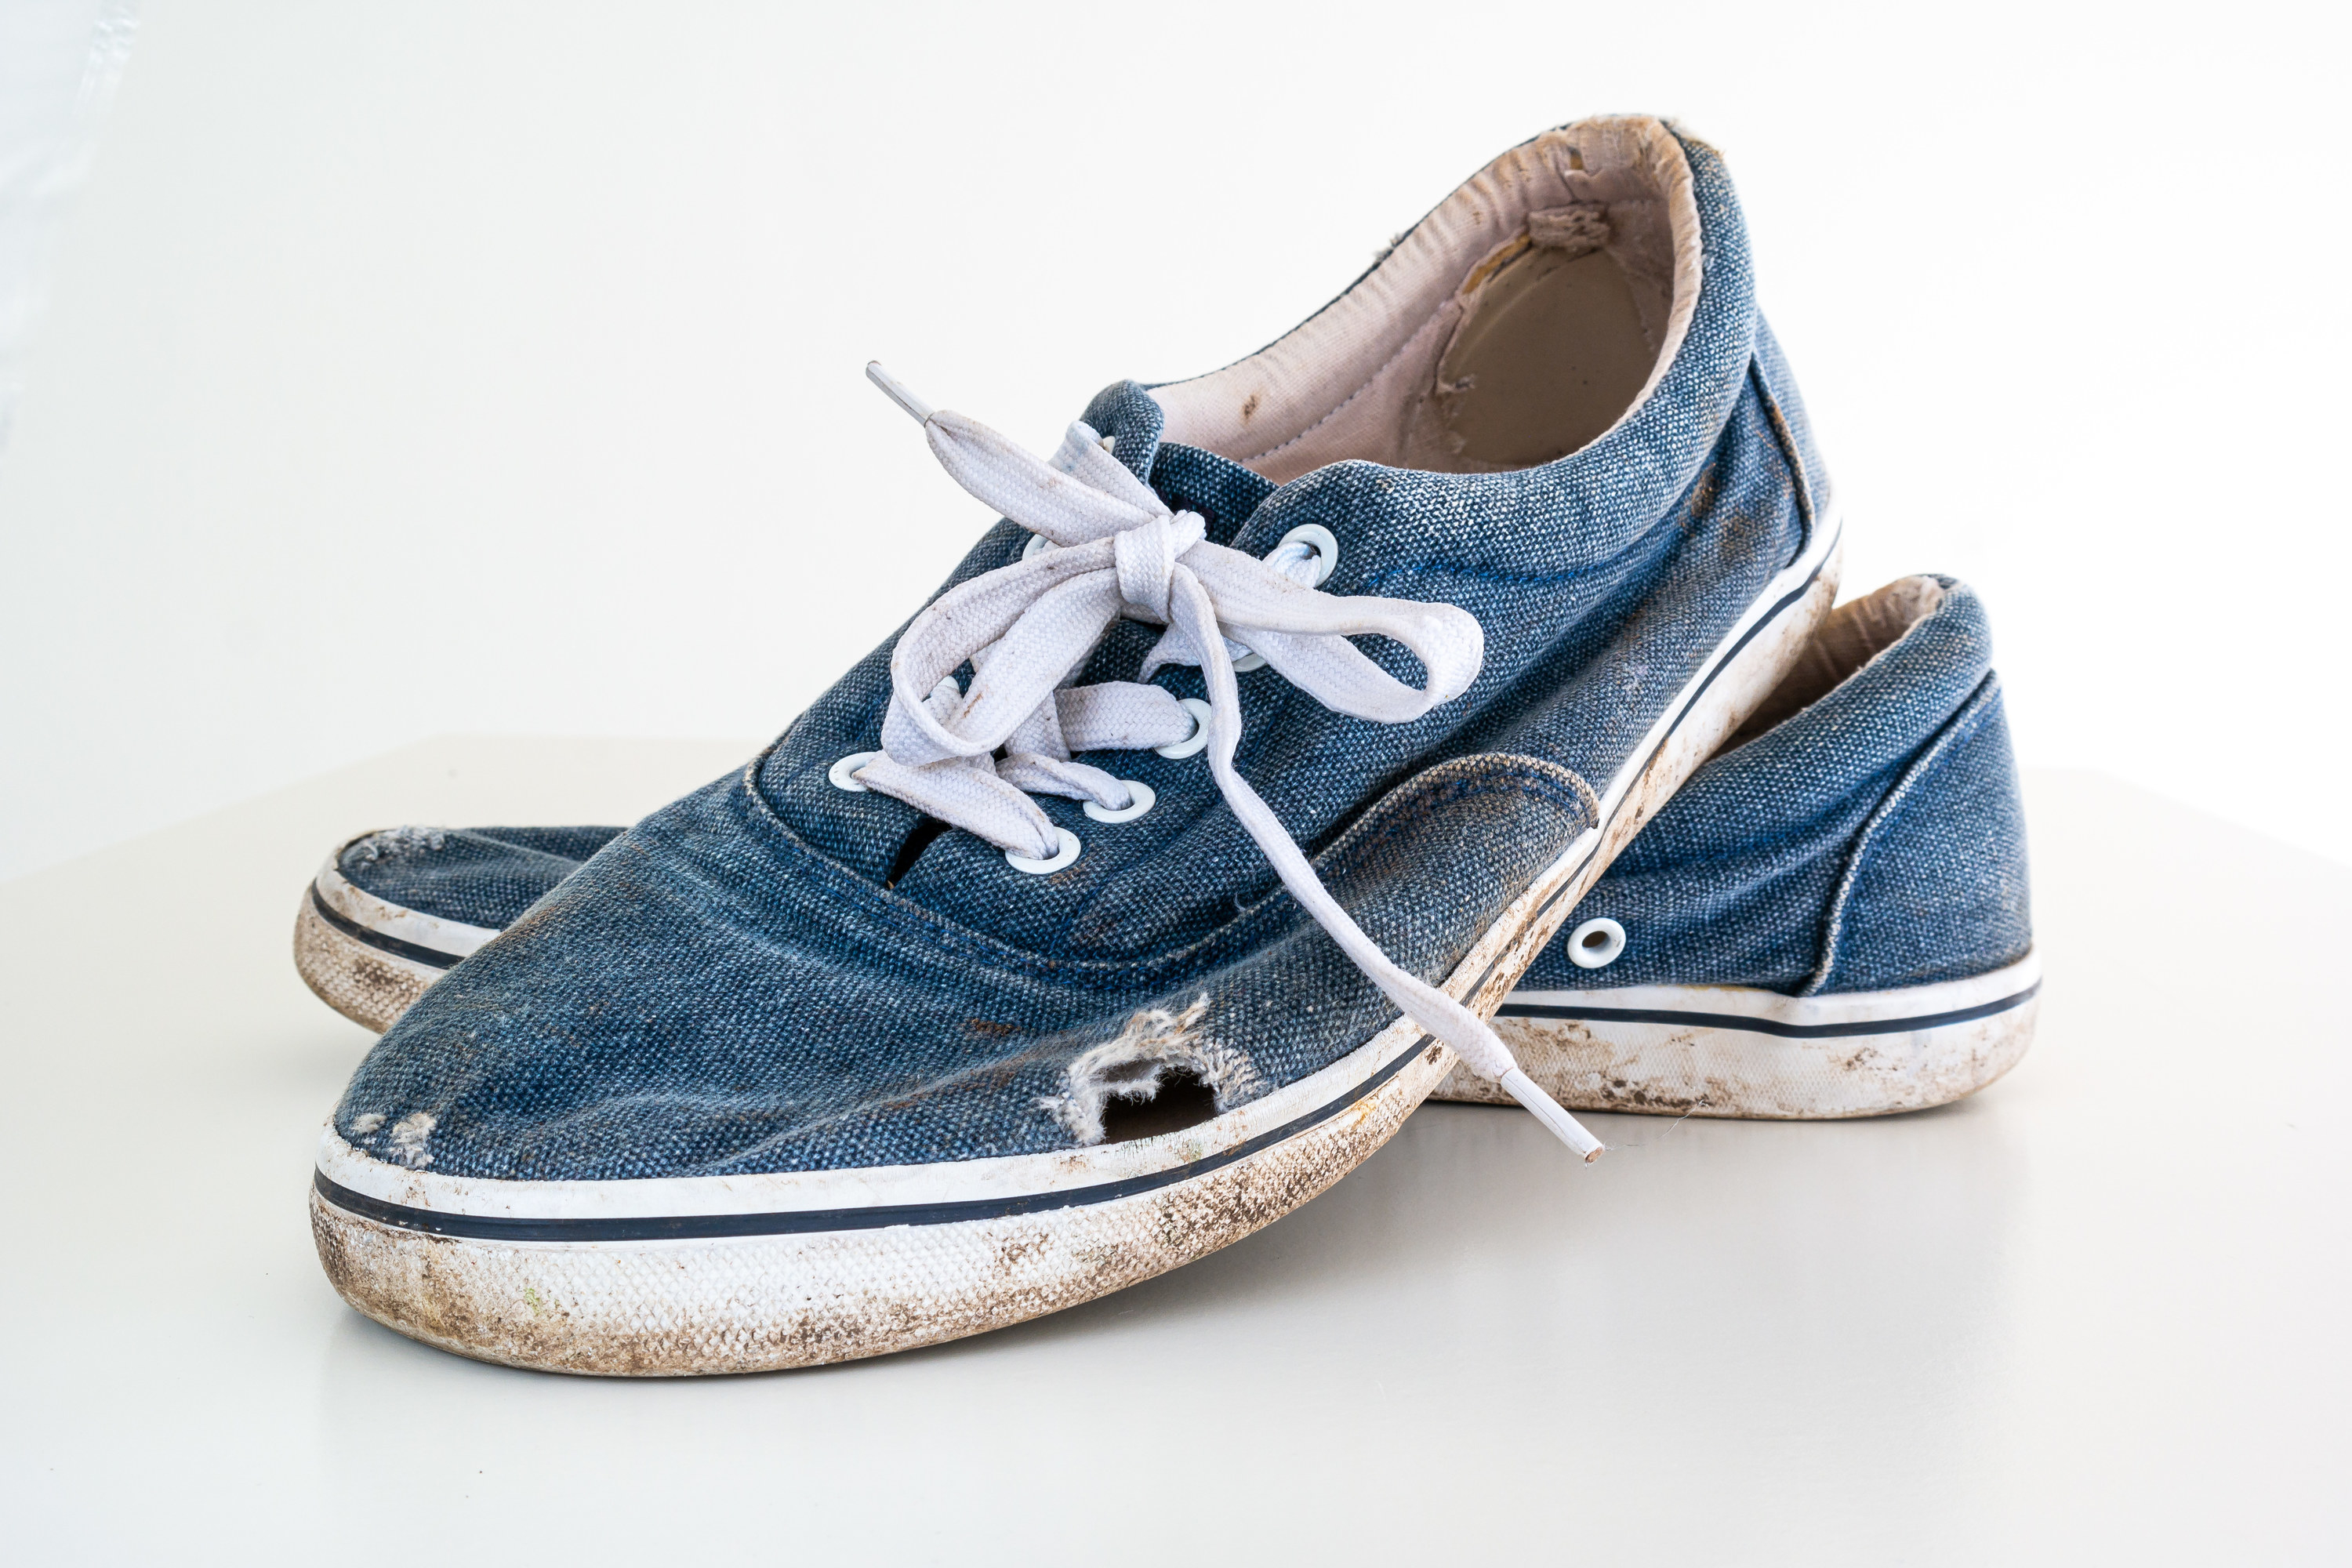 Old, beaten-up pair of sneakers